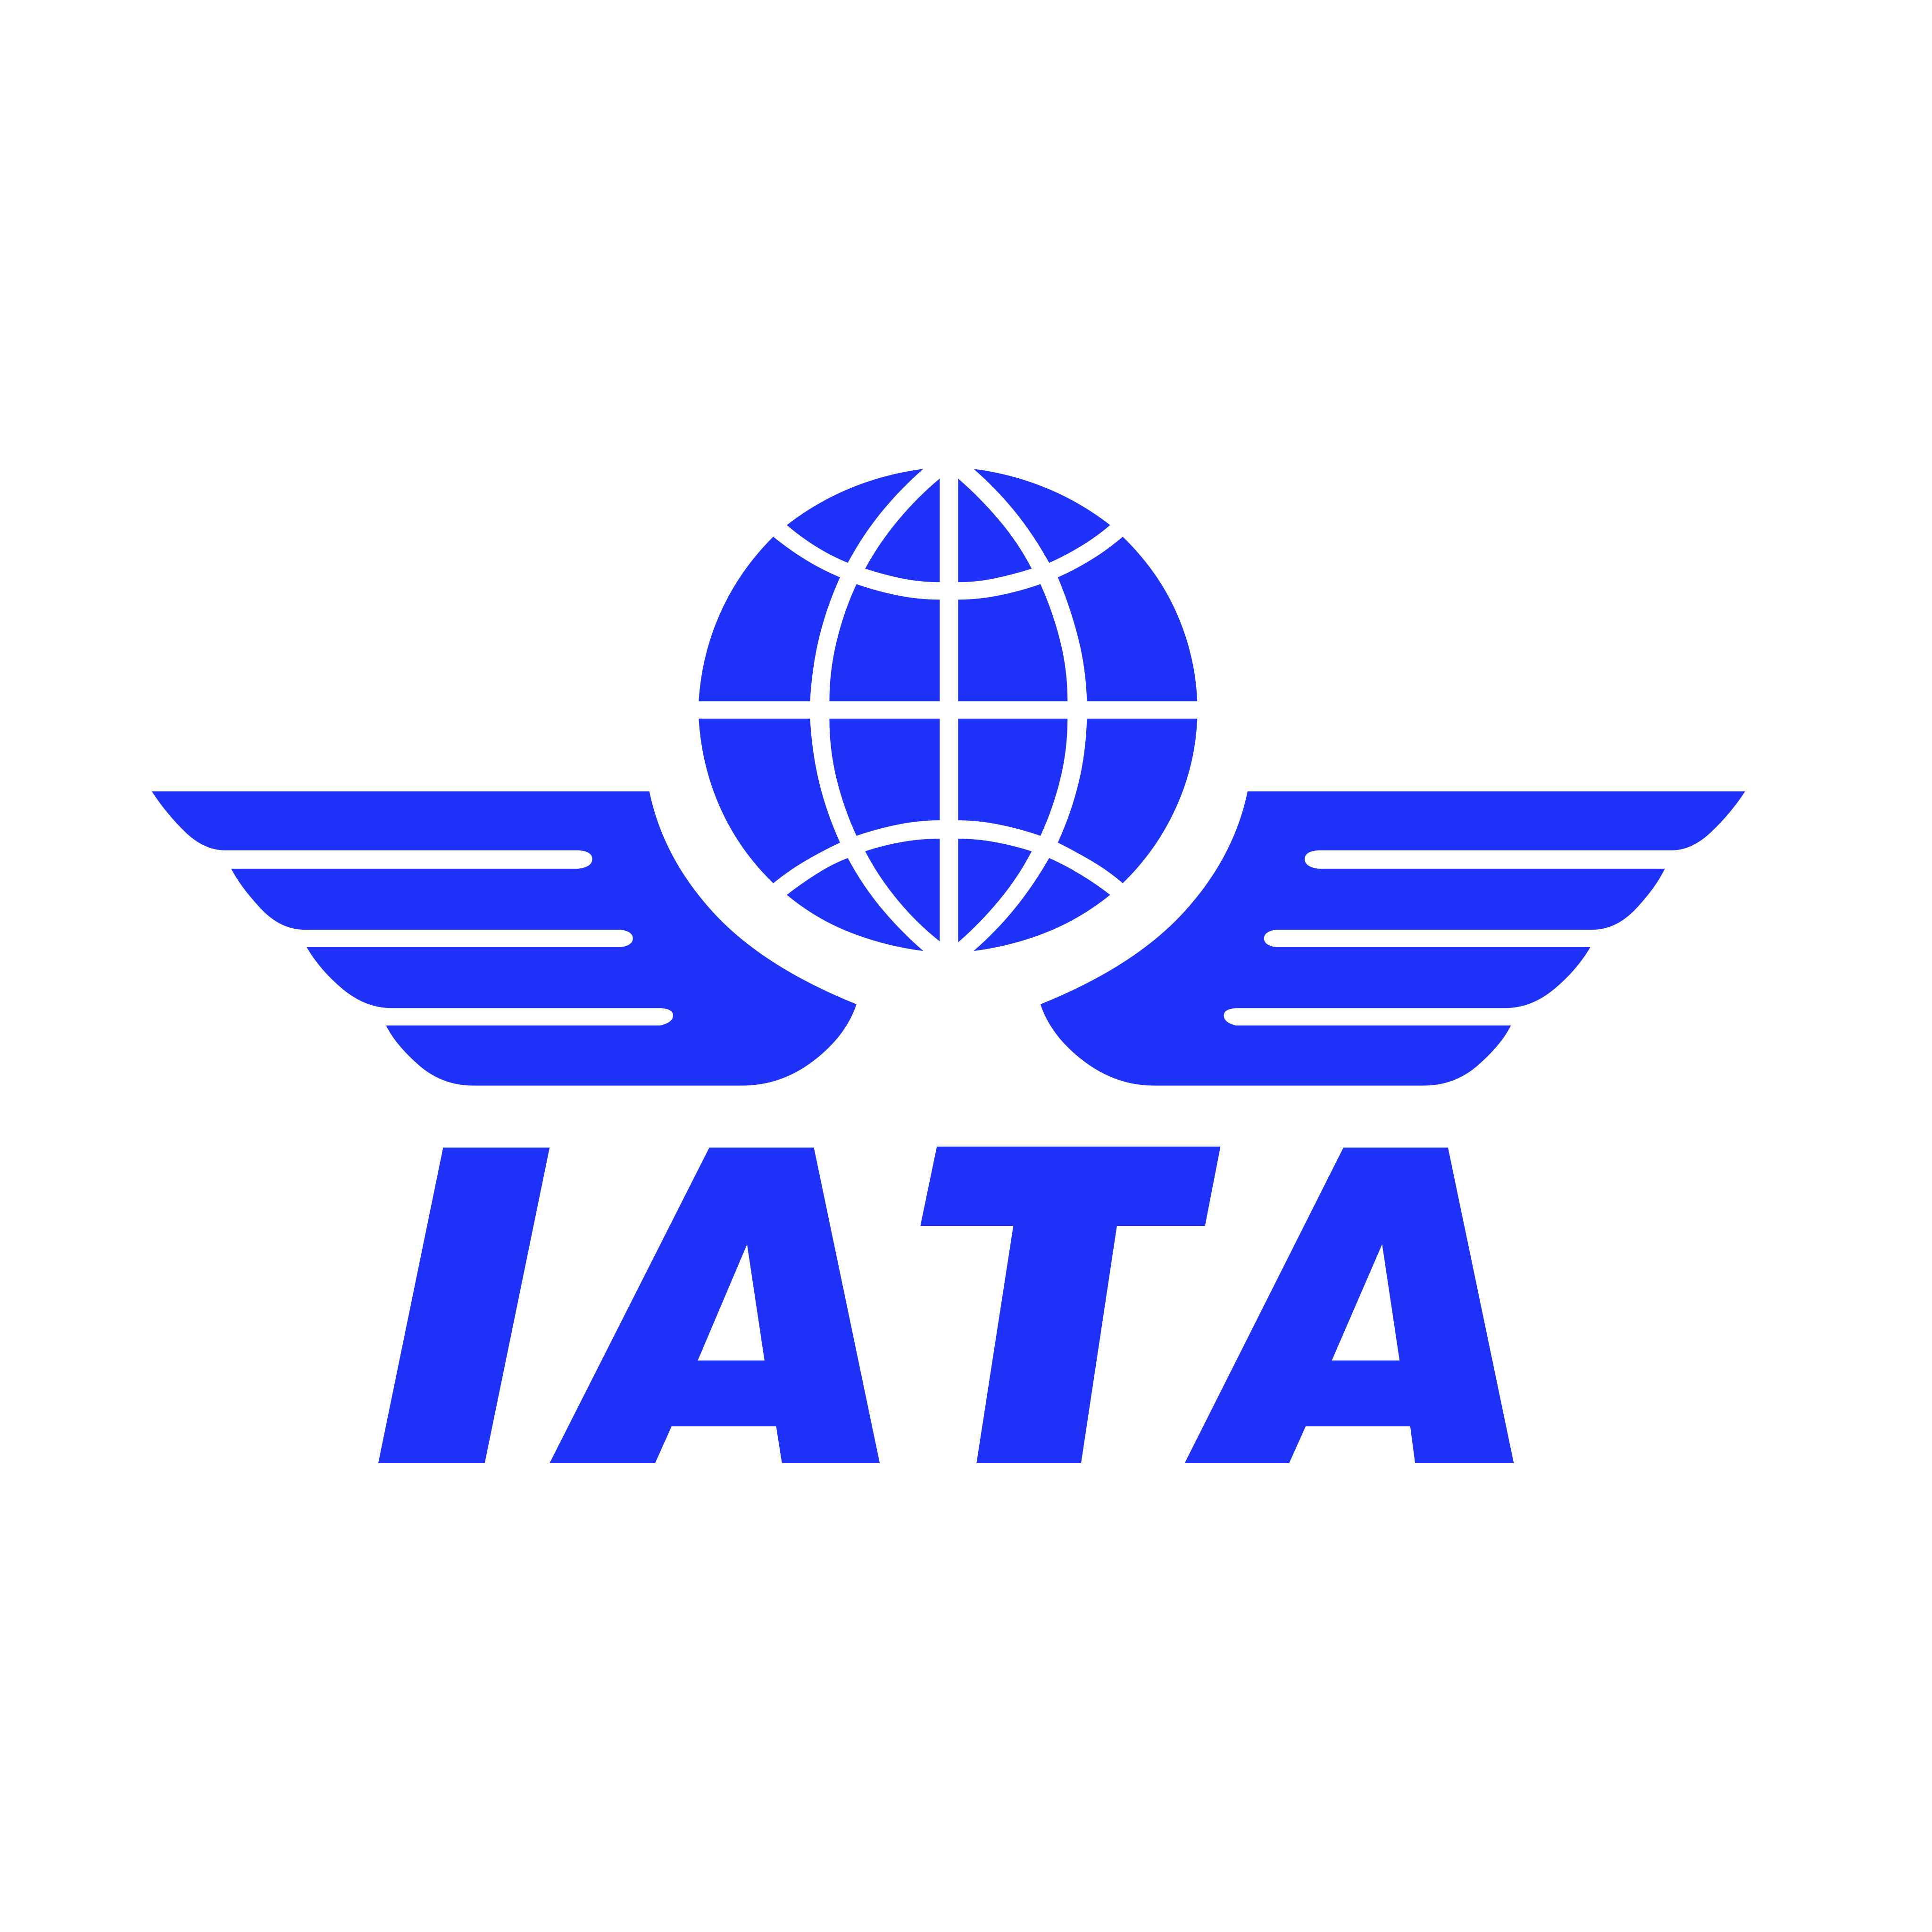 iata logo 0 - IATA Logo